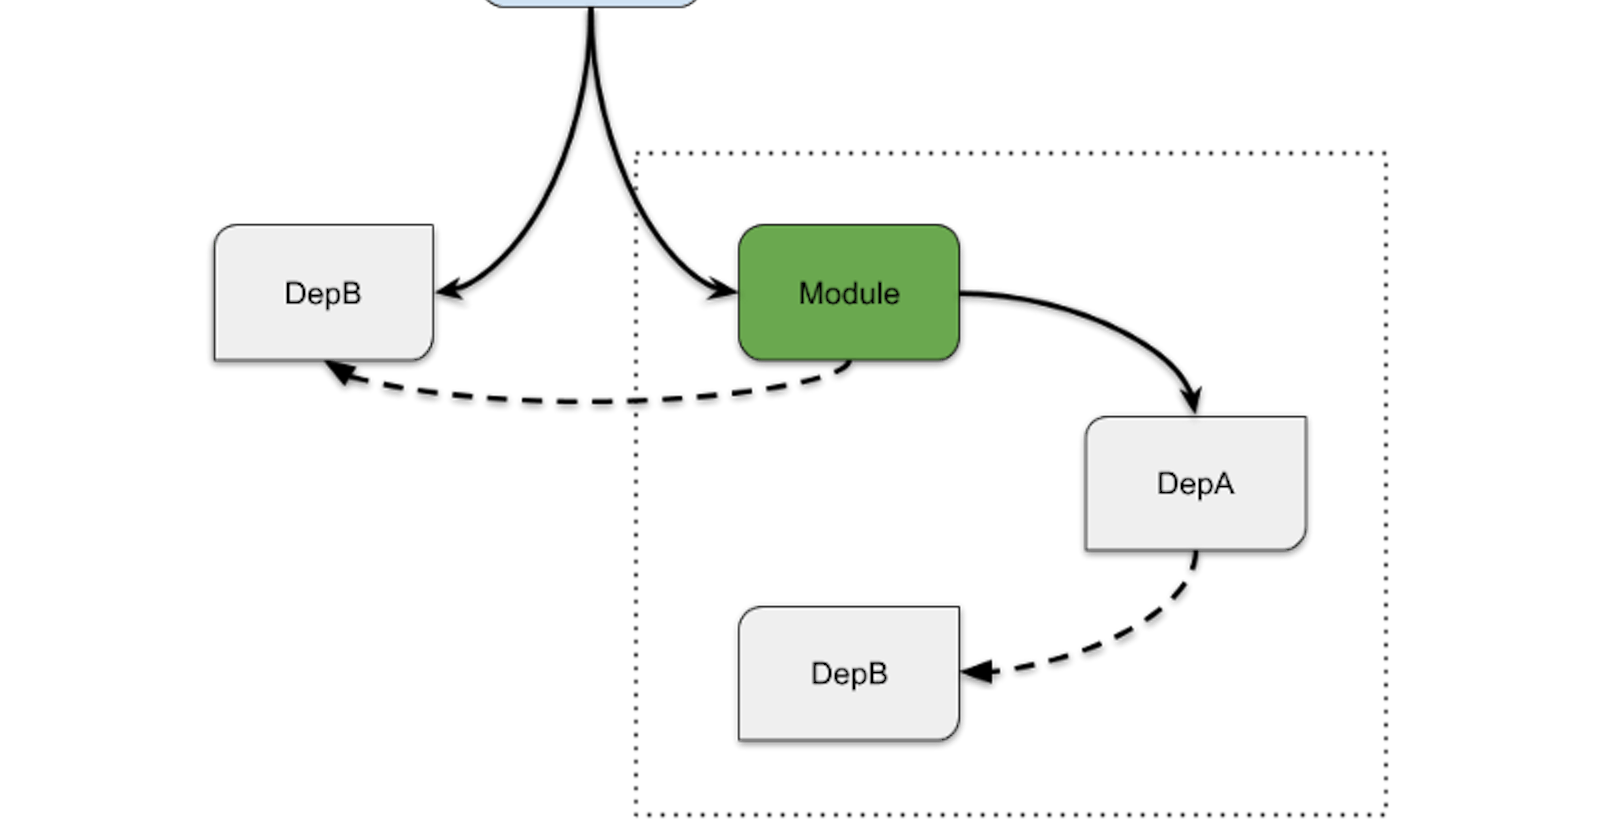 What are peer dependencies in a Node module?